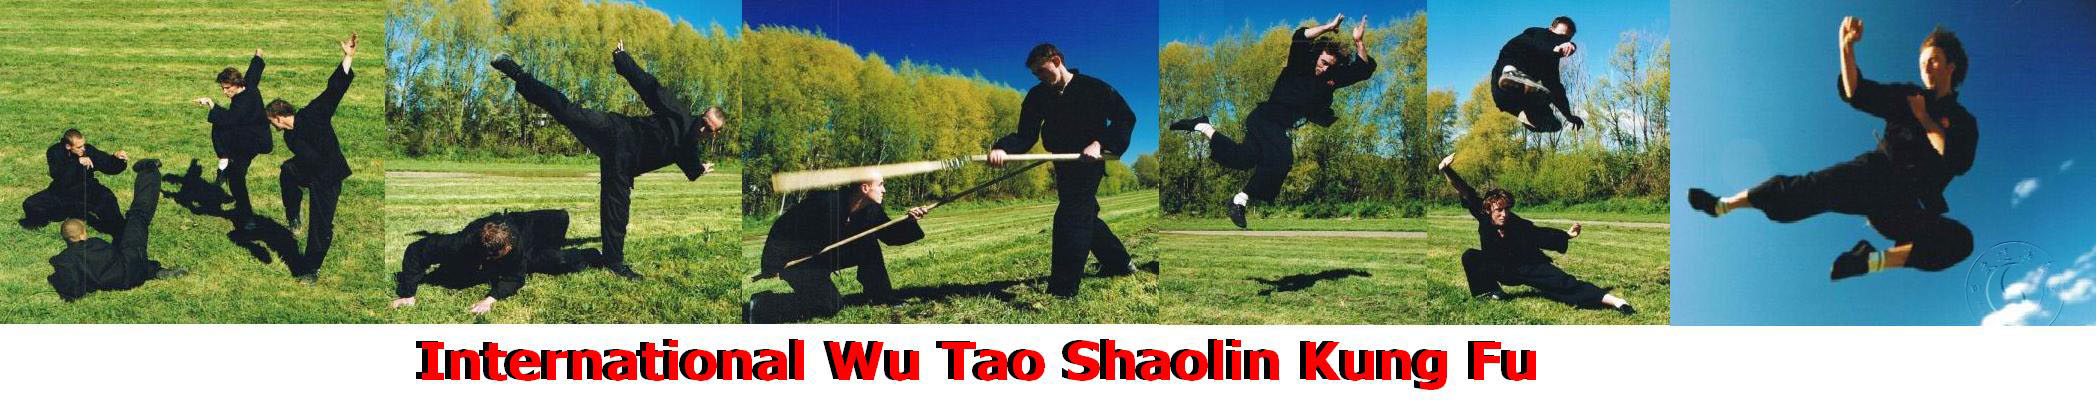 Wu Tao Shaolin Kung Fu Banner